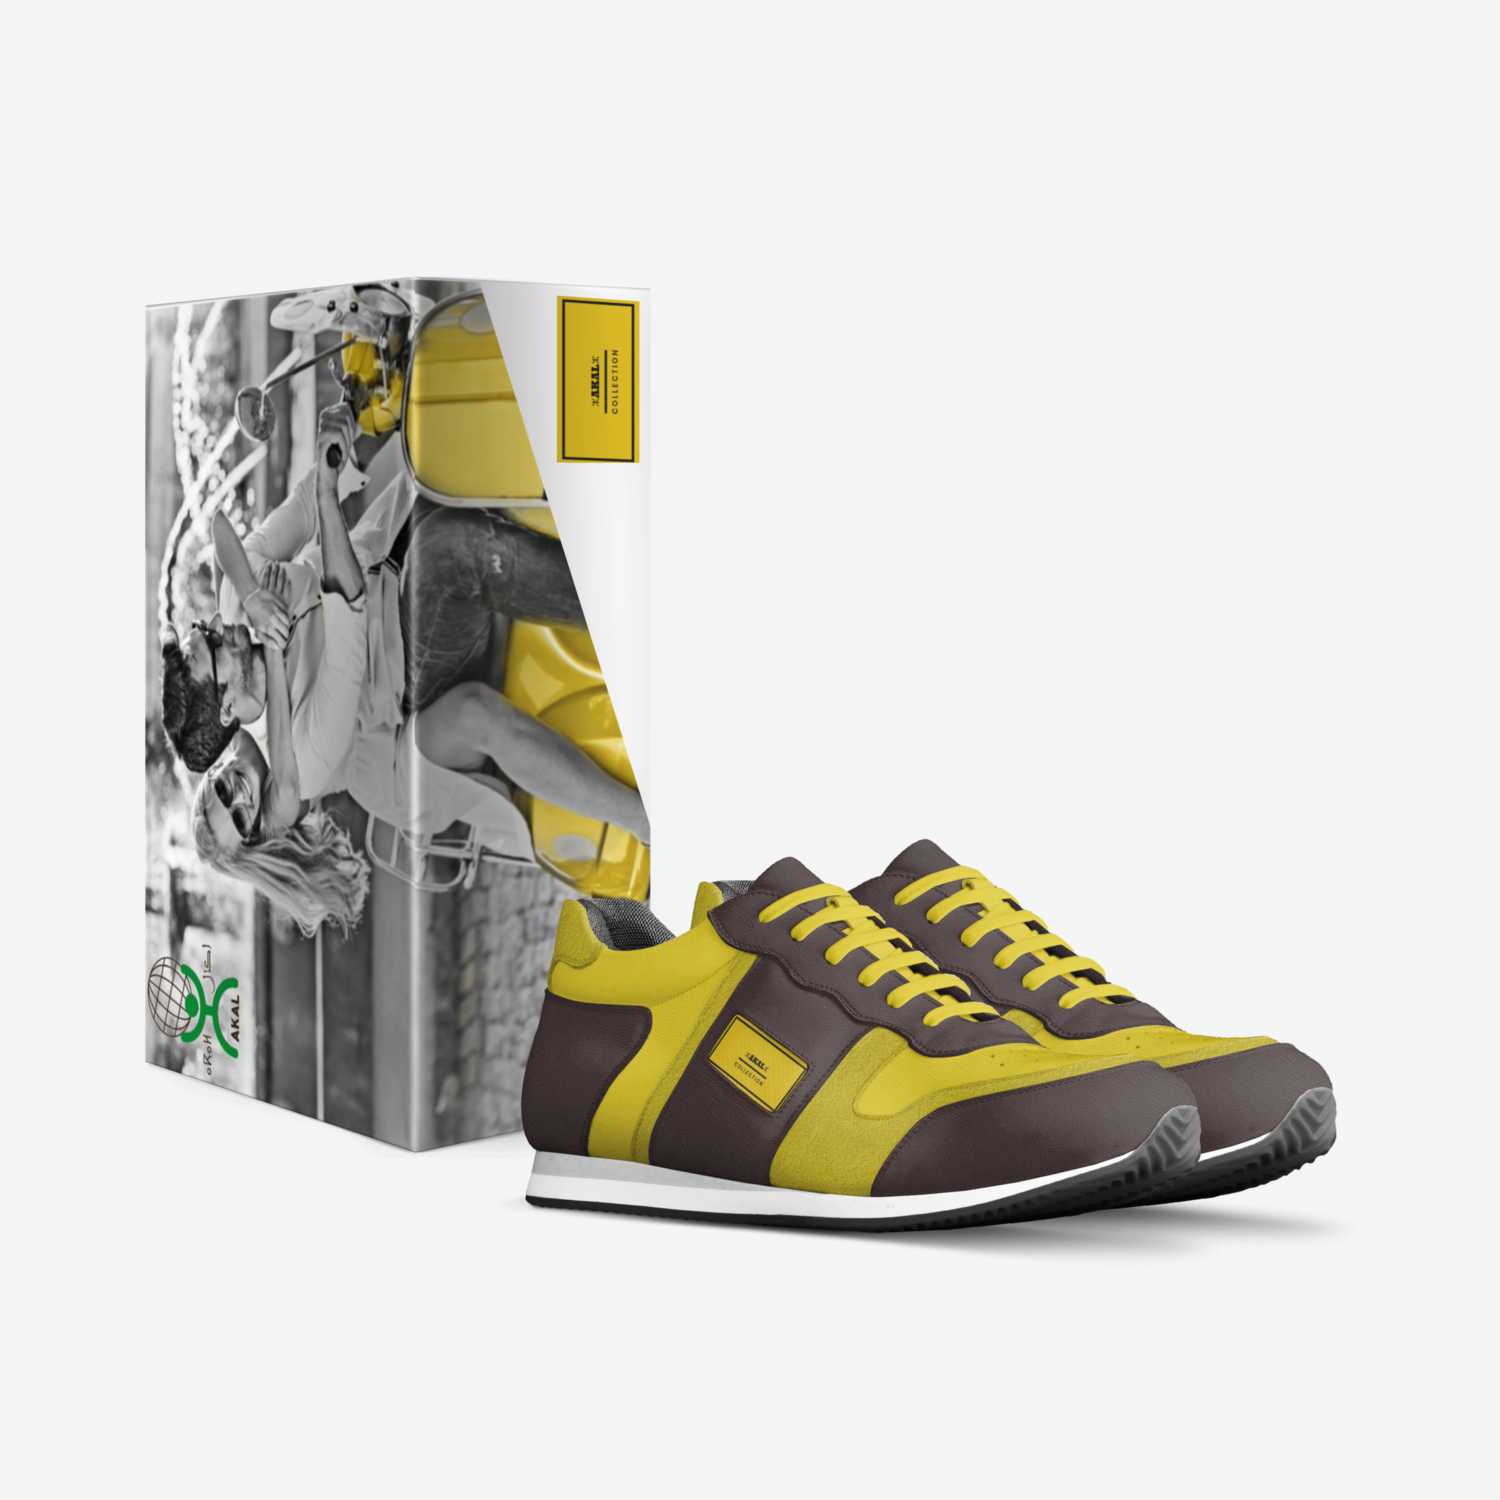 ⵣAKALⵣ custom made in Italy shoes by Otmane Yassine | Box view